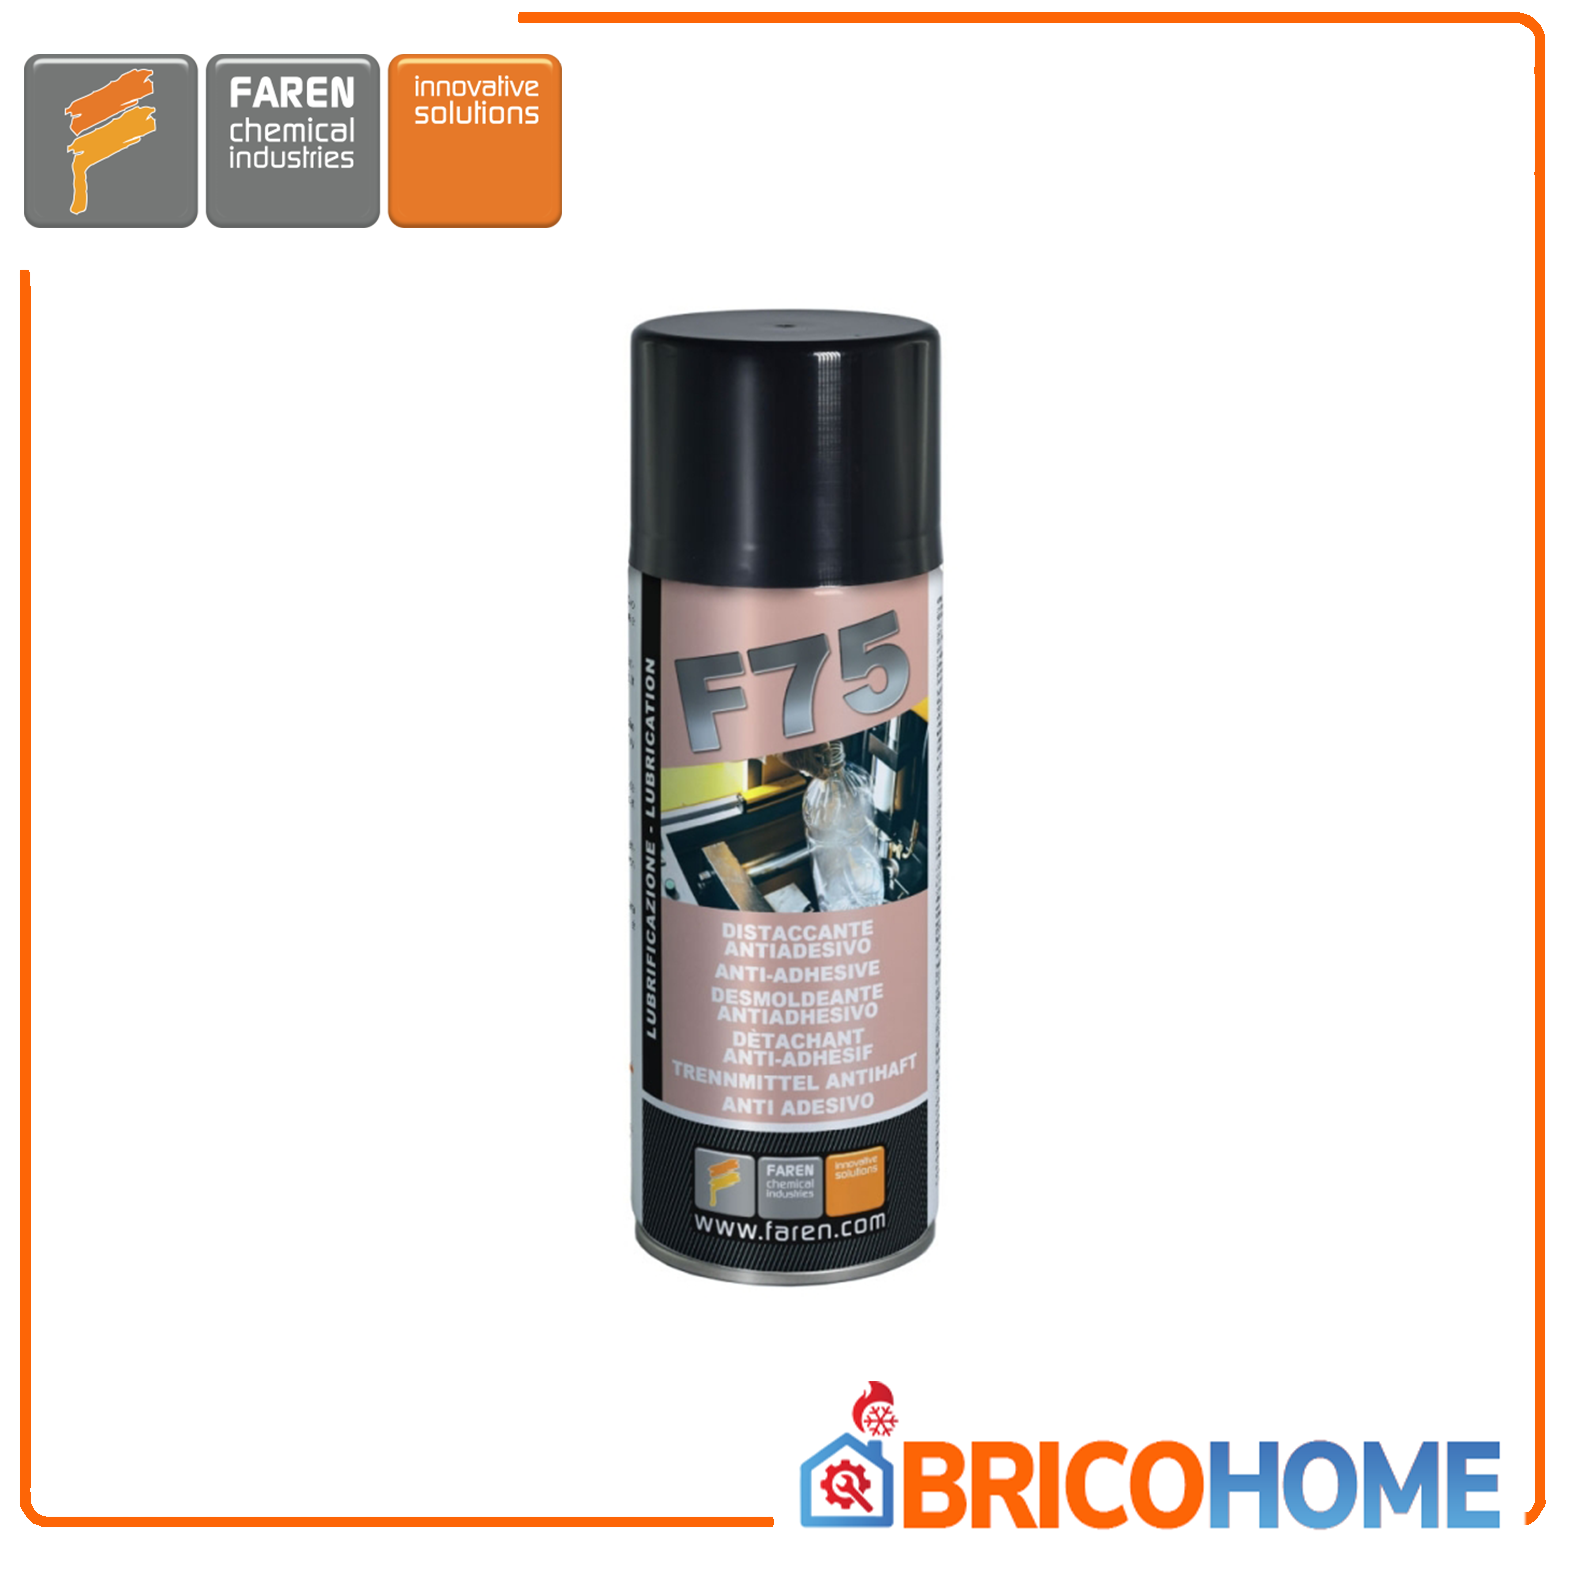 F75 FAREN silicone anti-adhesive release agent spray can 400ml.